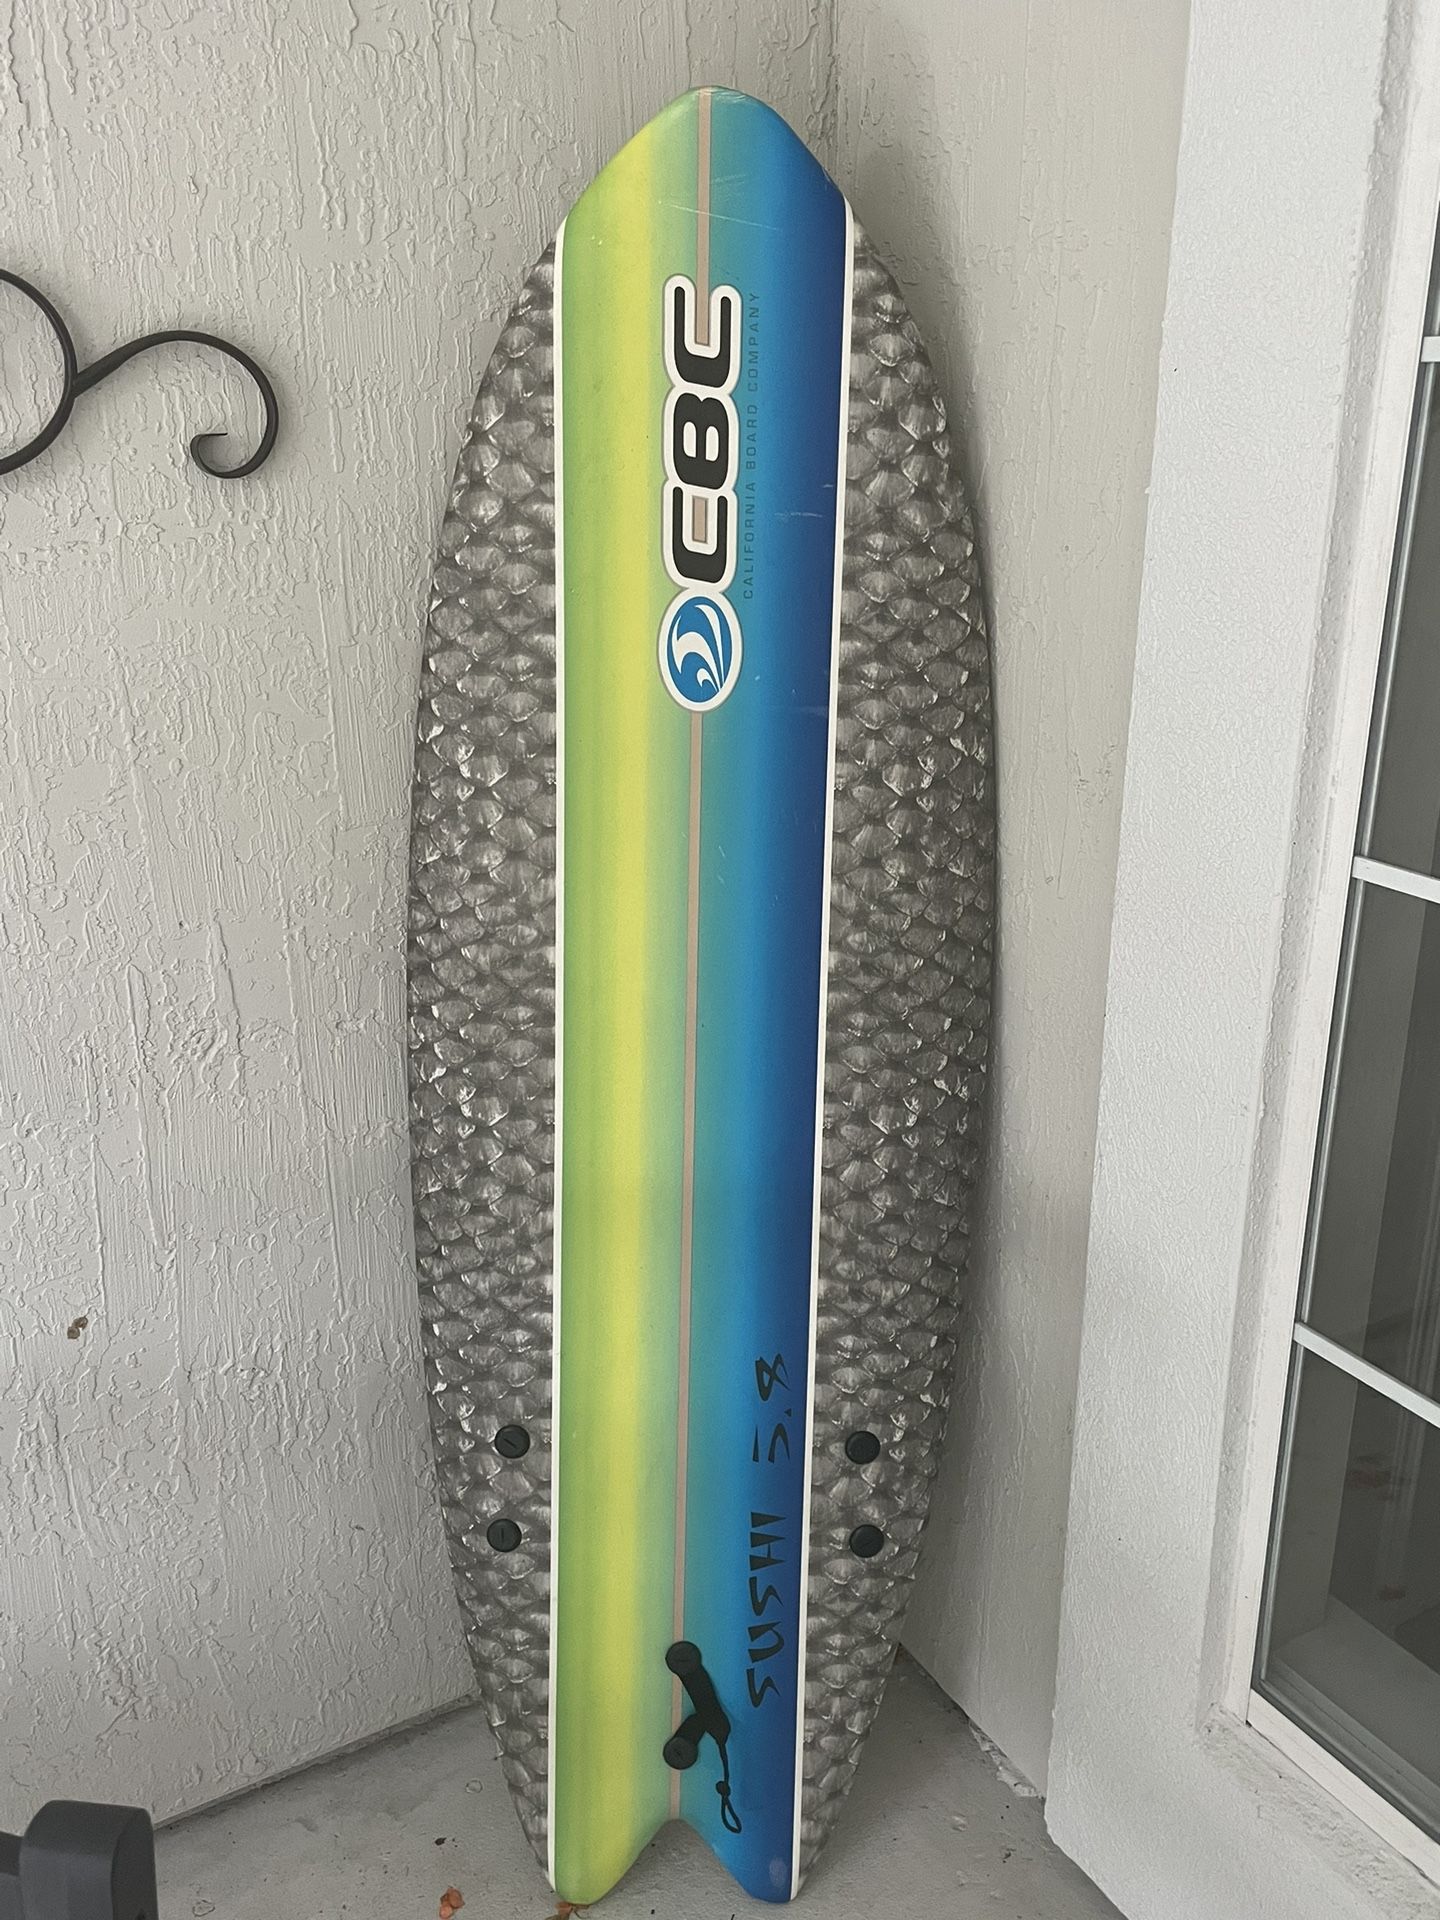 CBC California Board Company 5.8 Sushi Foam Surfboard Soft Top